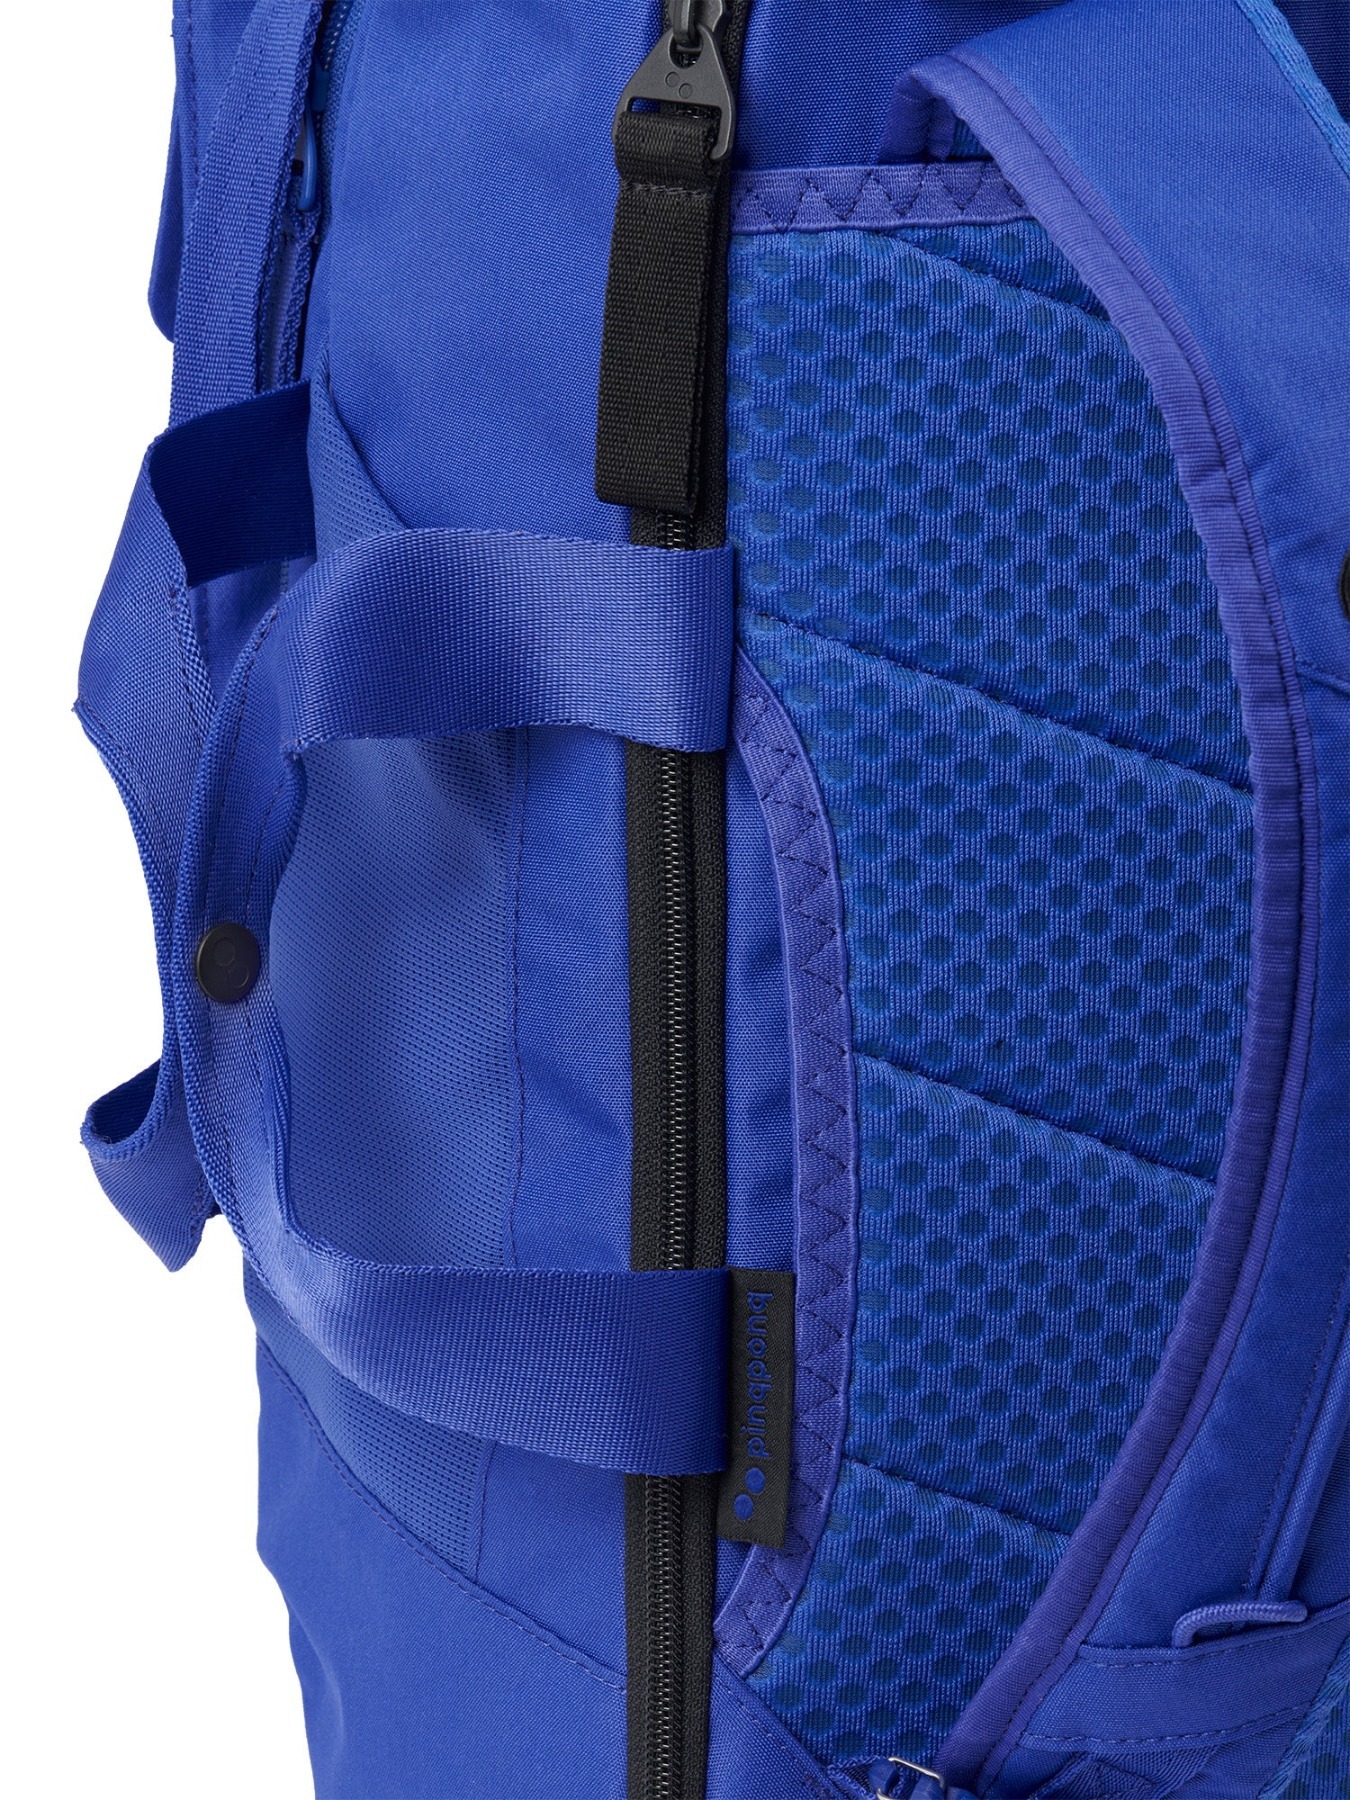 pinqponq Backpack BLOK medium Construct - Poppy Blue 12